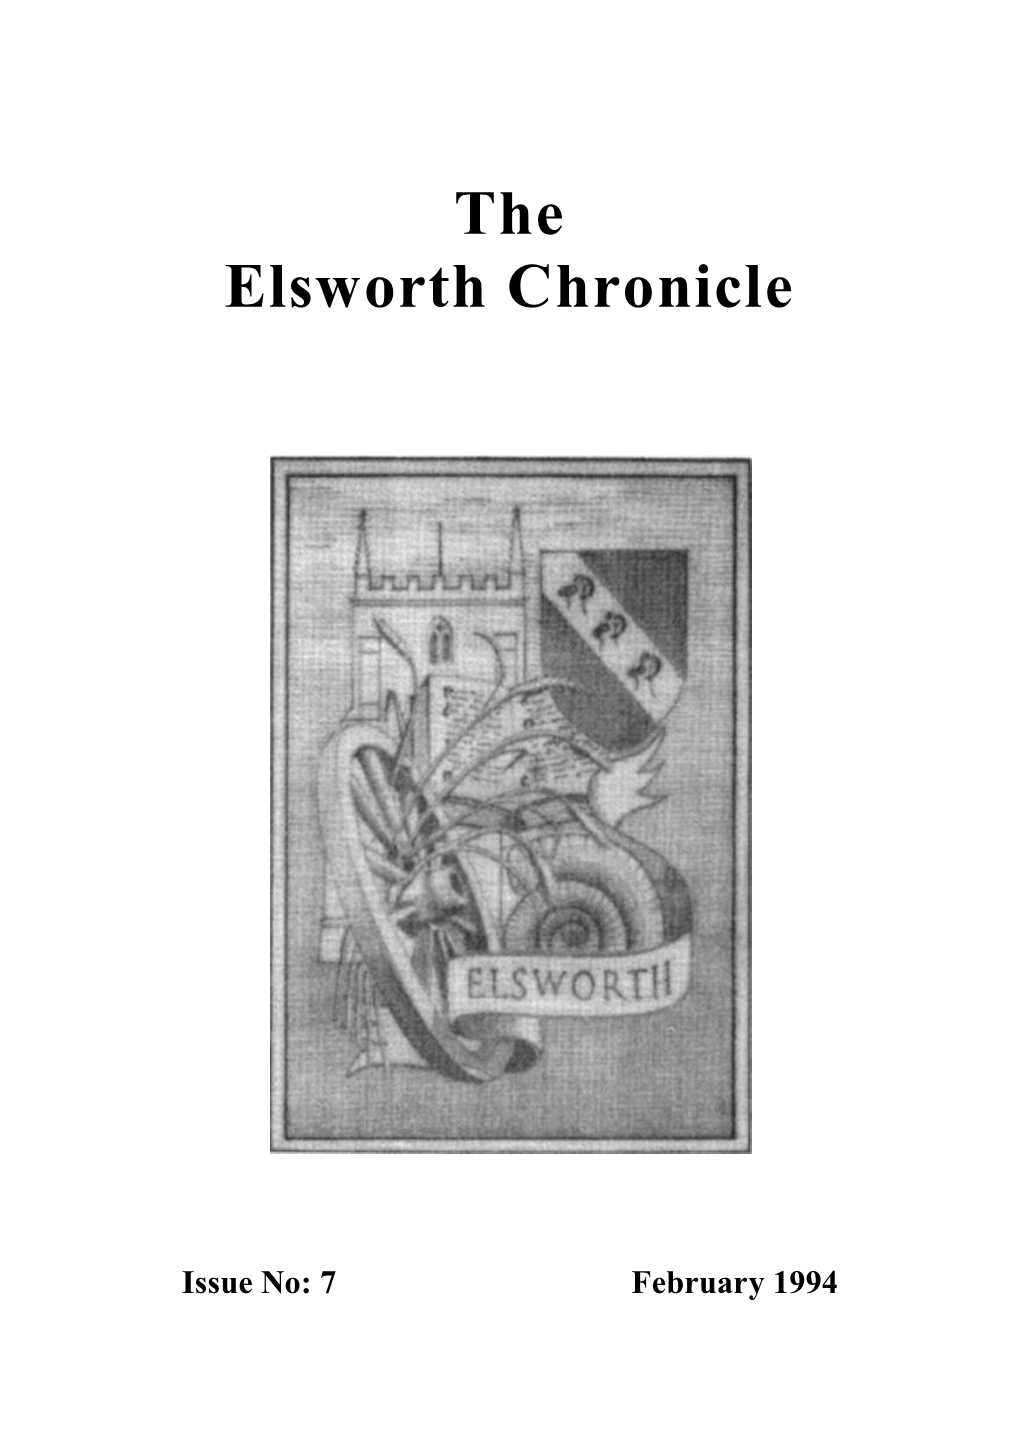 Elsworth Chronicle Issue 7 February 1994